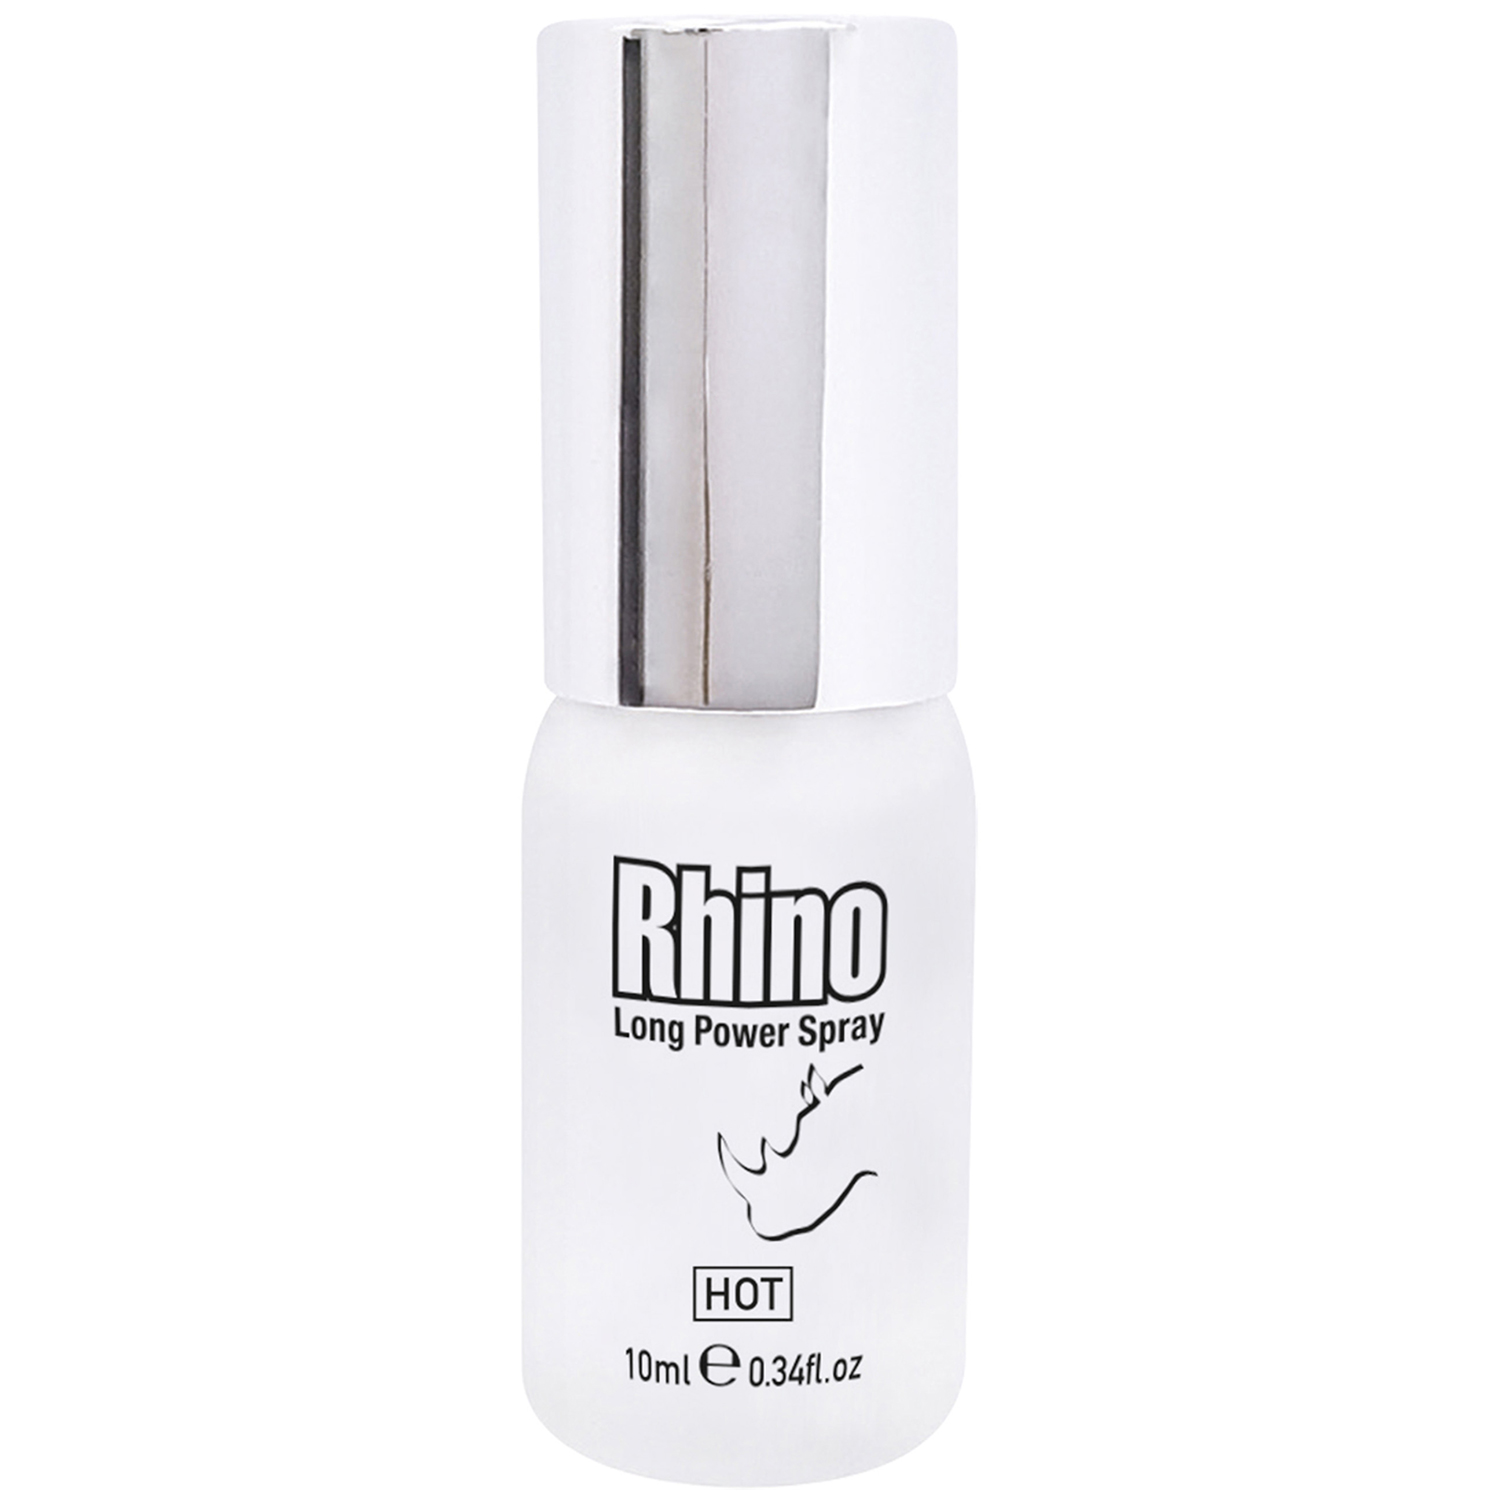 Rhino Spray Hot Long Power Spray 10 ml - Klar